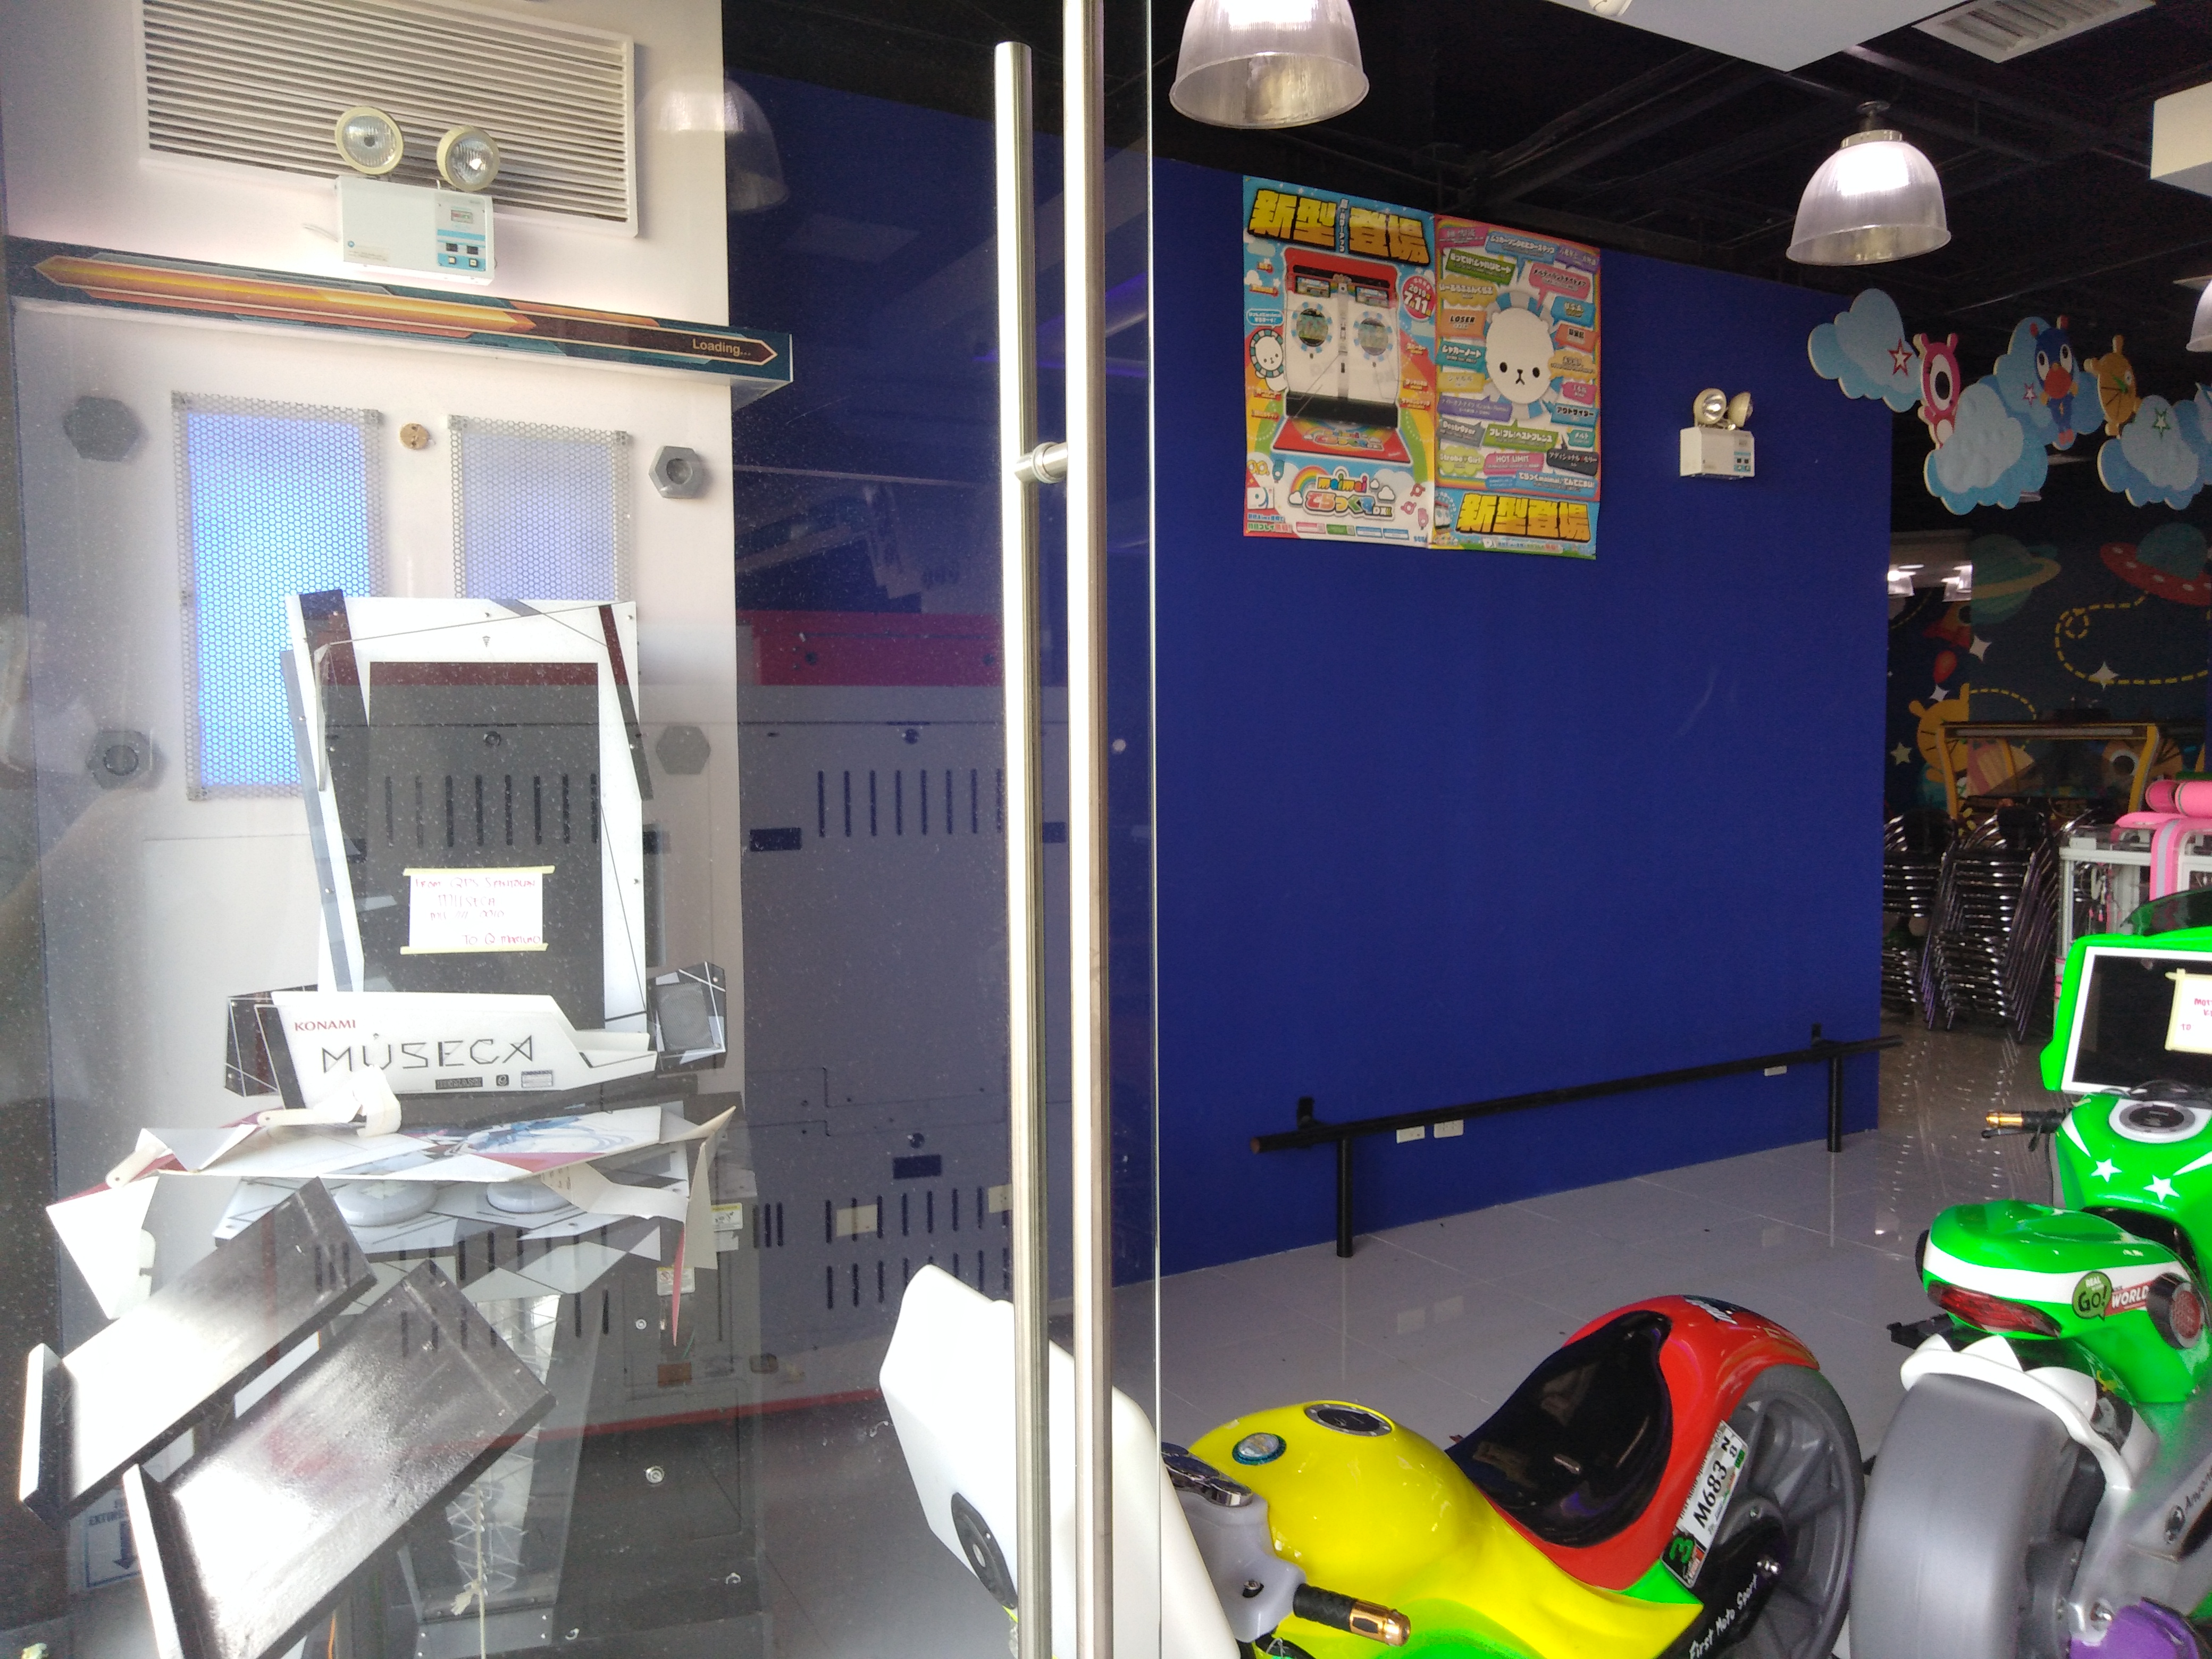 MUSECA Machine, and original location of Maimai DX Cabs